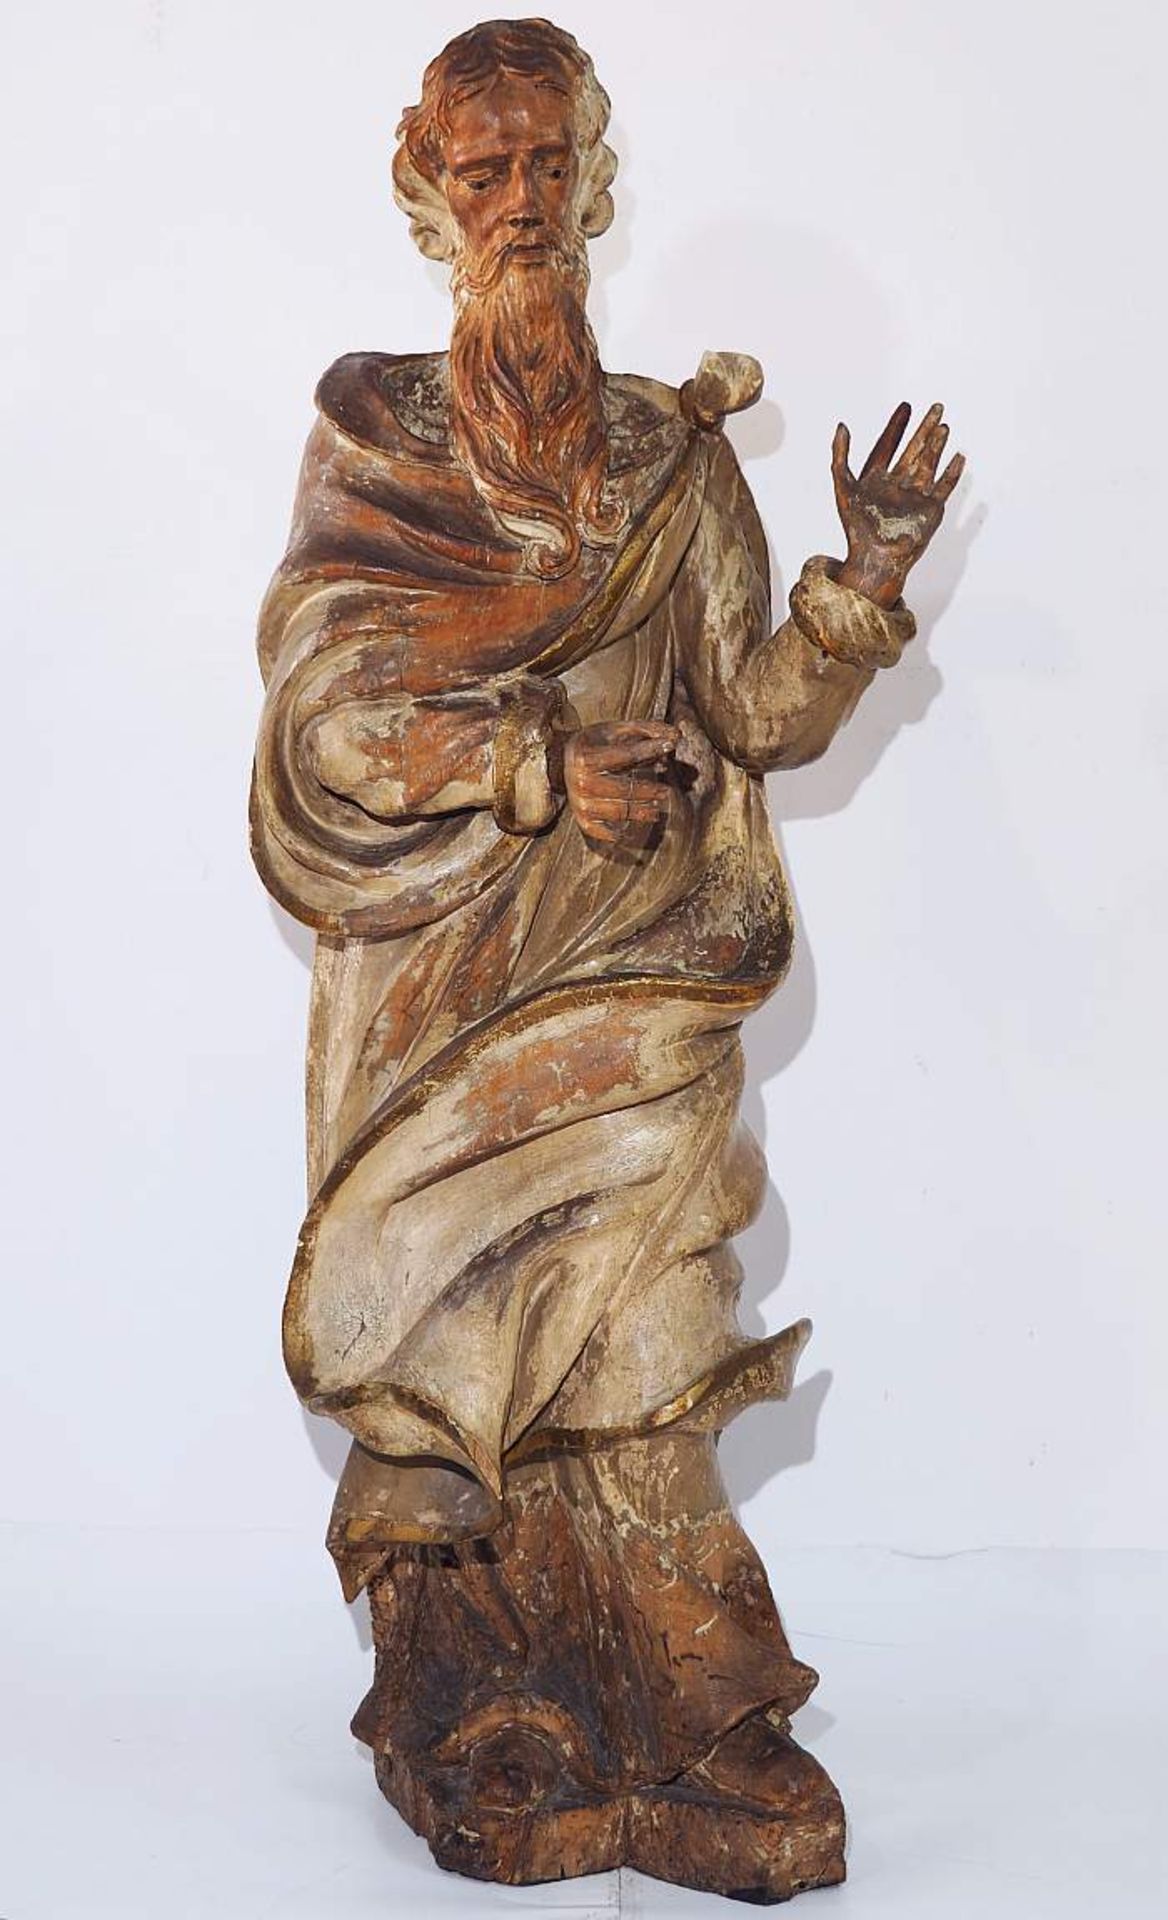 Altarfigur "Apostel", Barock, Süddeutschland 17./18. Jahrhundert. Altarfigur "Apostel", Barock,